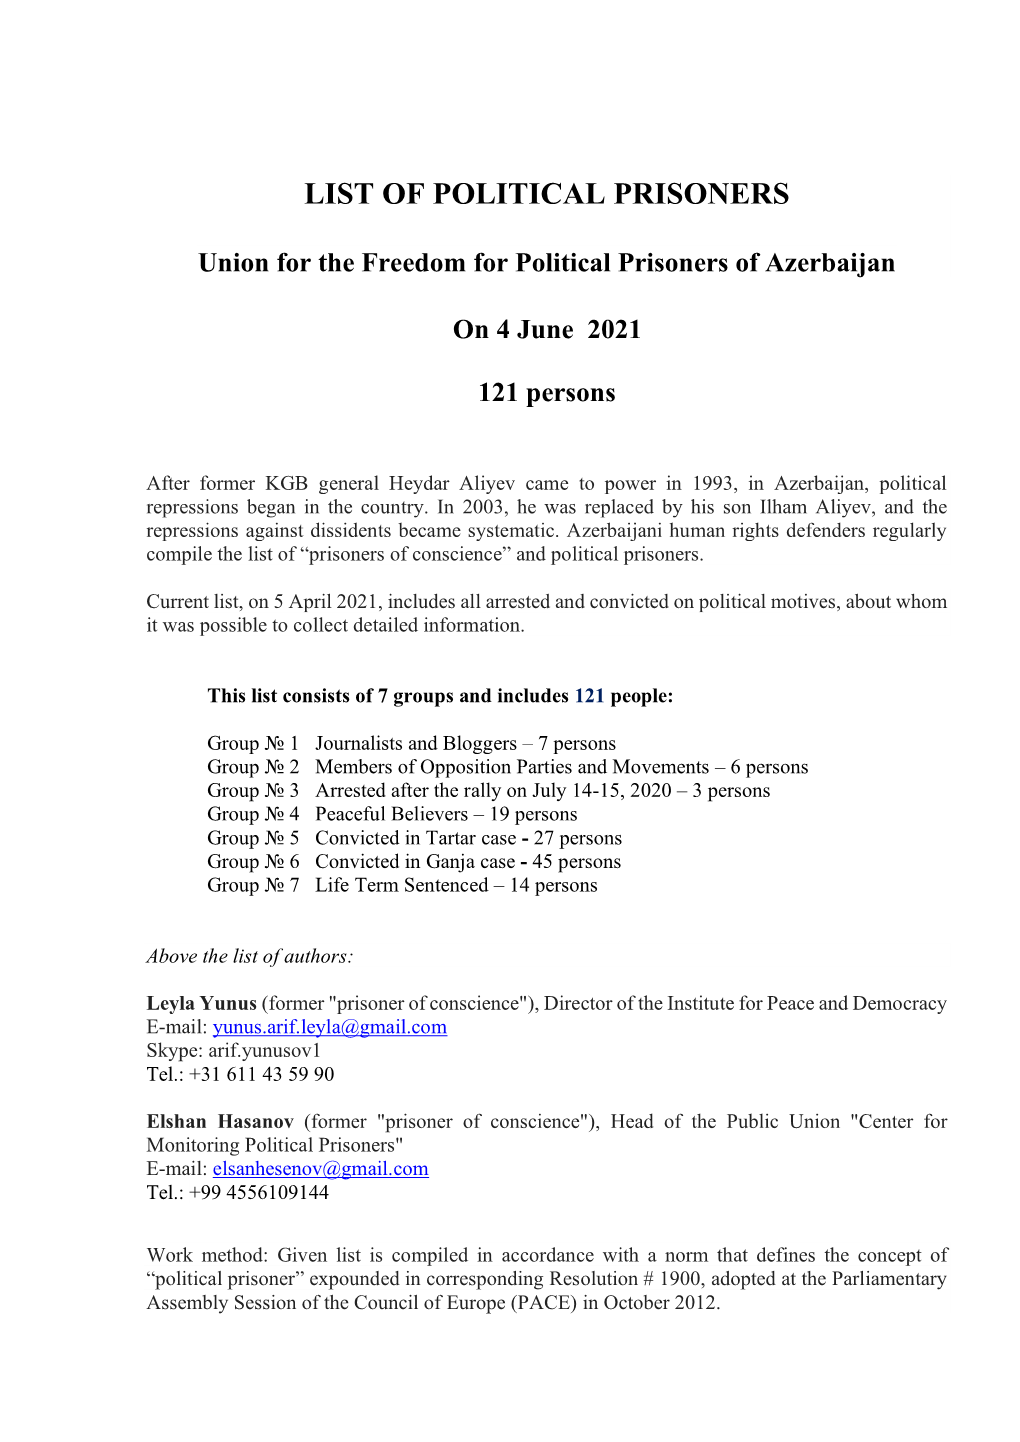 List of Political Prisoners